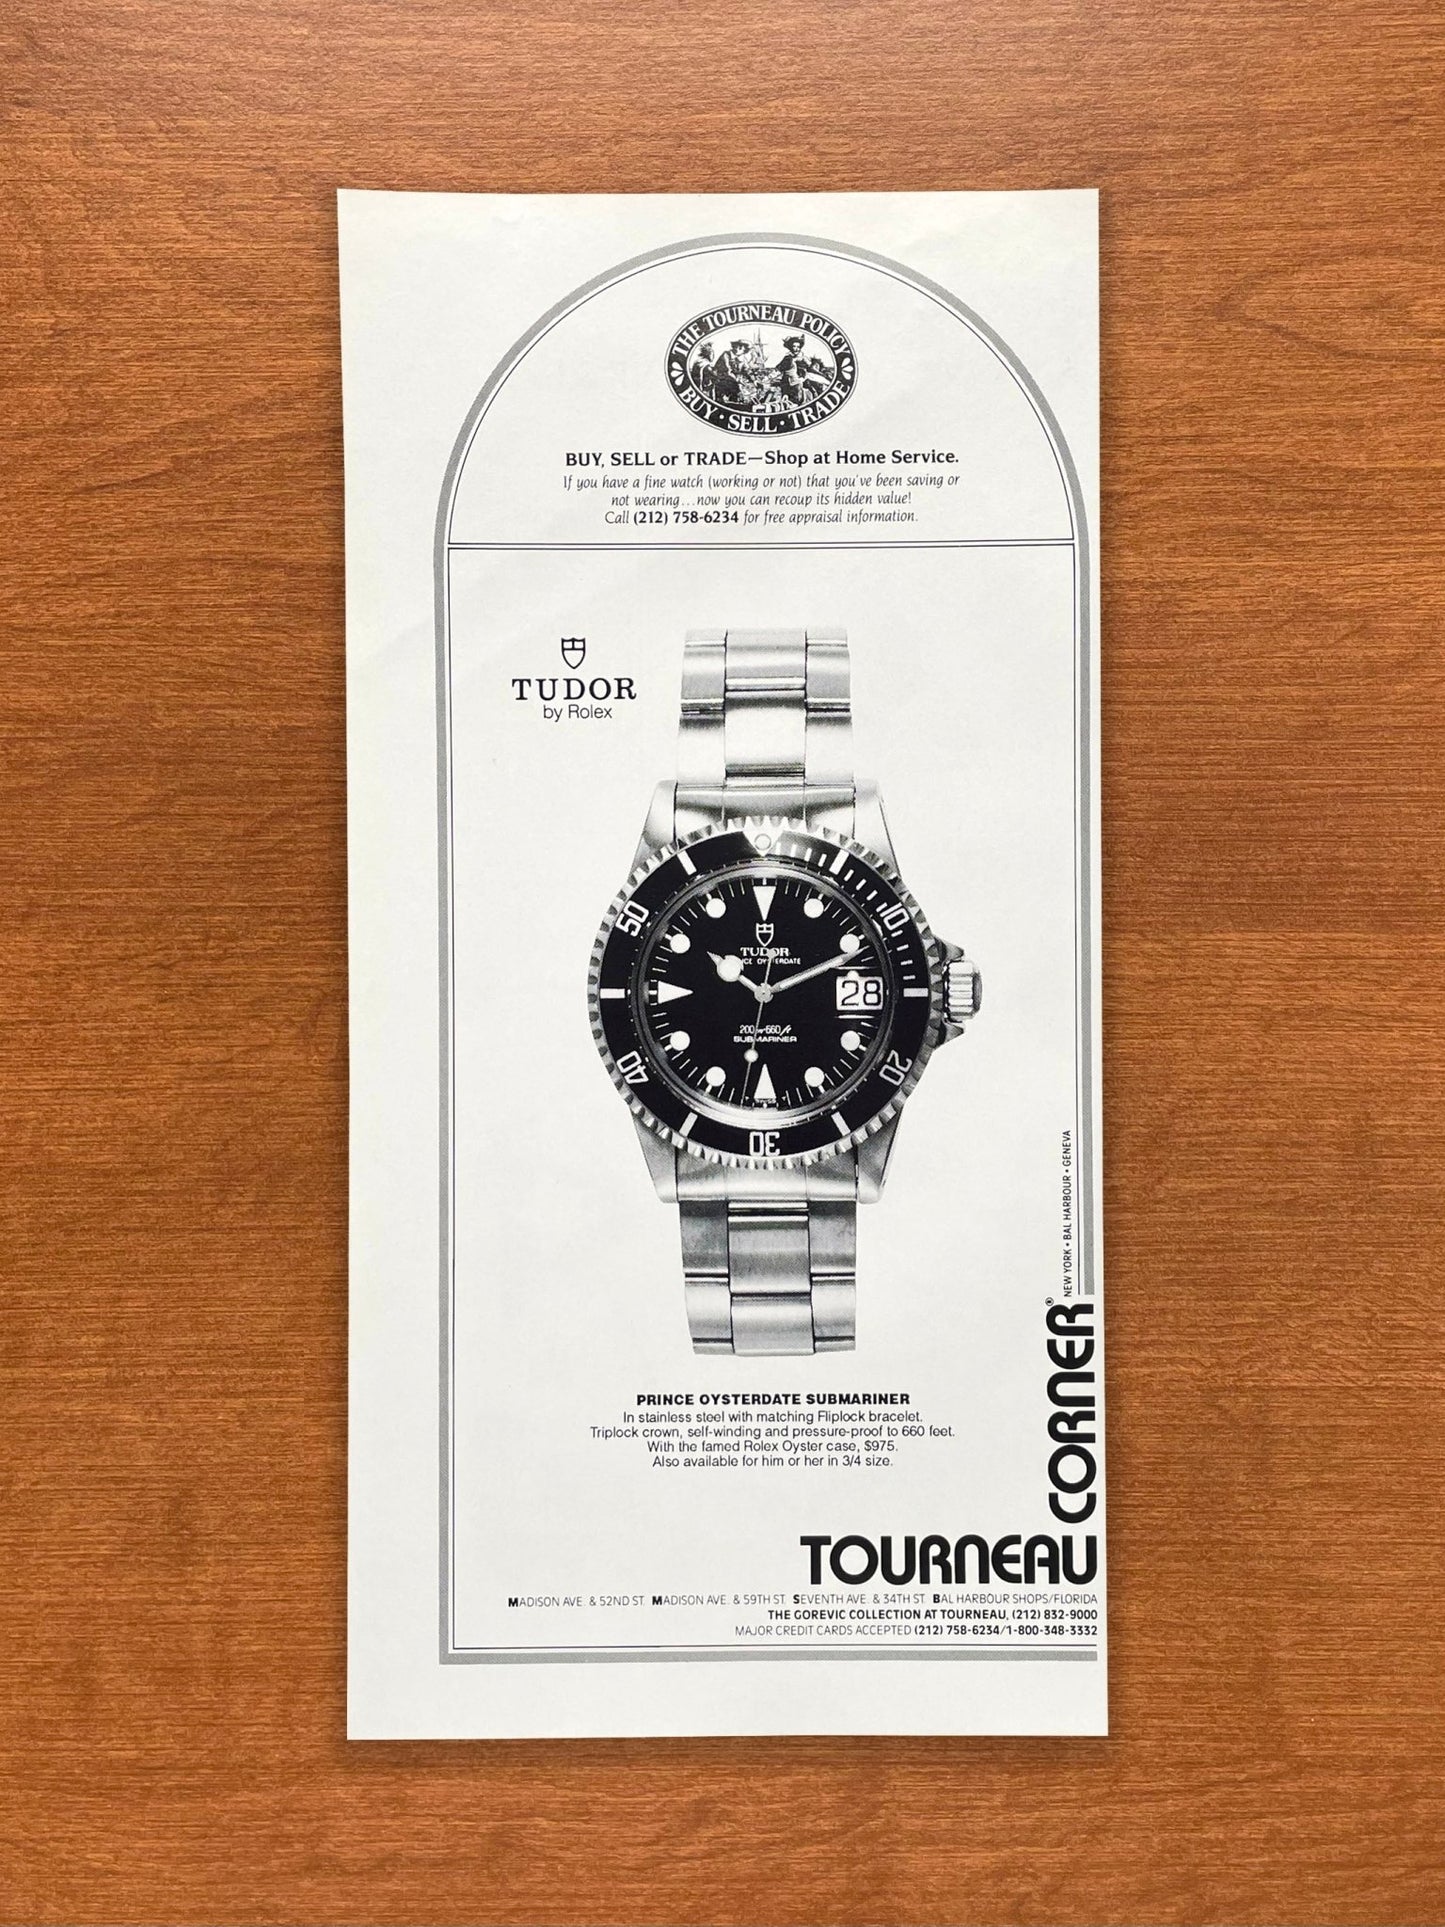 1991 Tudor "Lollipop" Submariner at Tourneau Advertisement